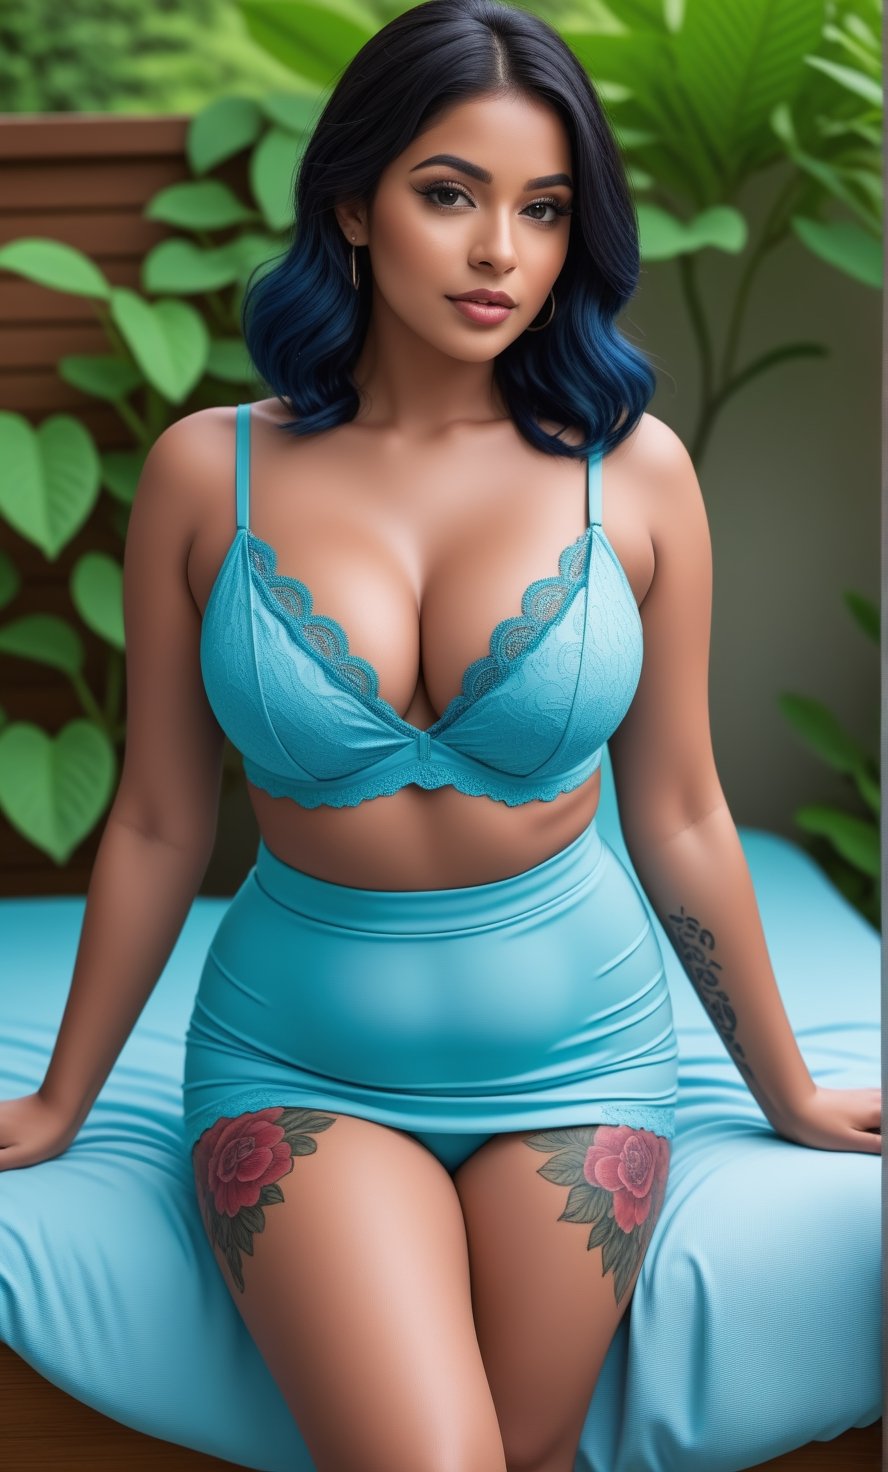 Foto de Fat woman with very large breasts in blue underwear on